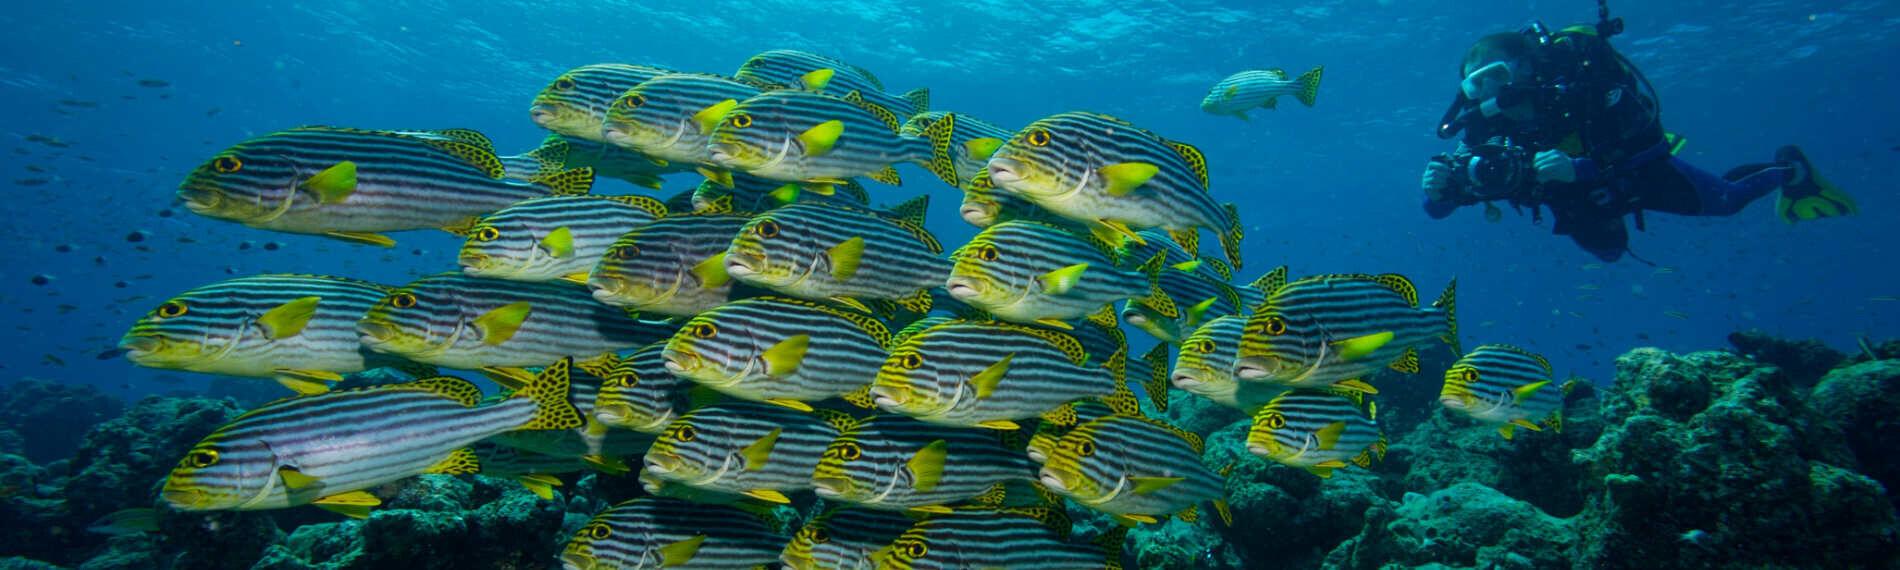 Header - Malediven - Kuredu - Fische